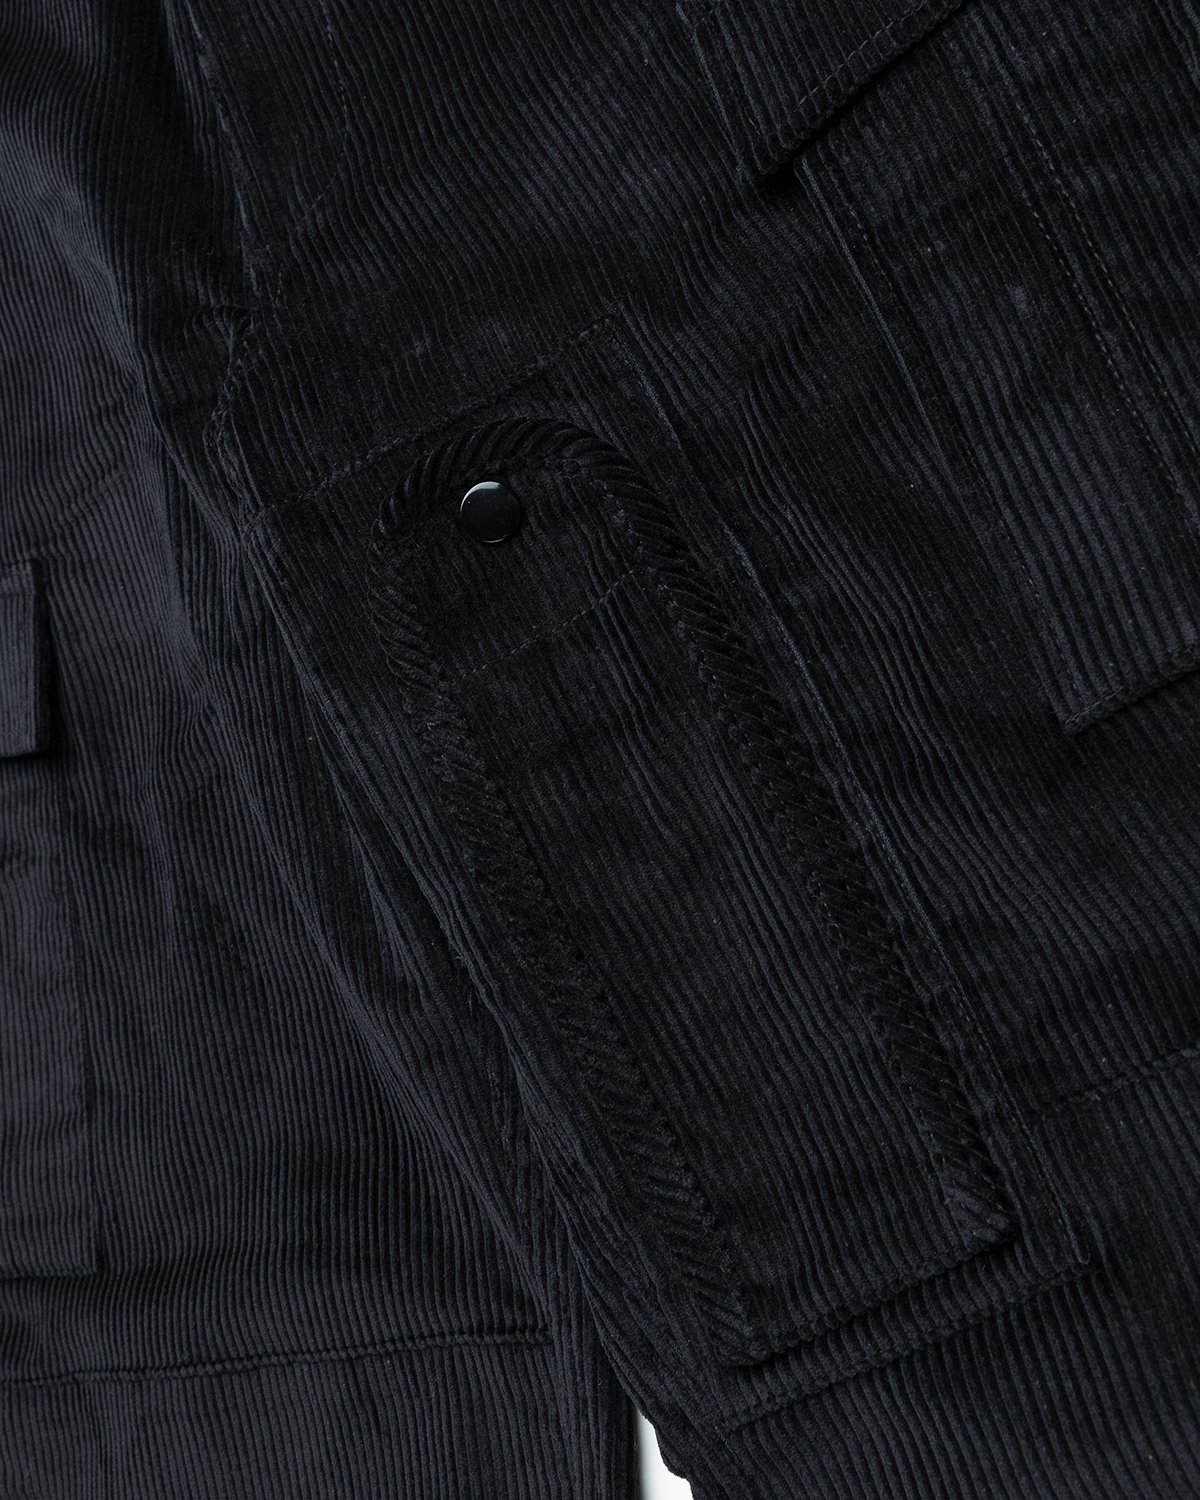 Winnie New York - Corduroy Cargo Black - Clothing - Black - Image 4